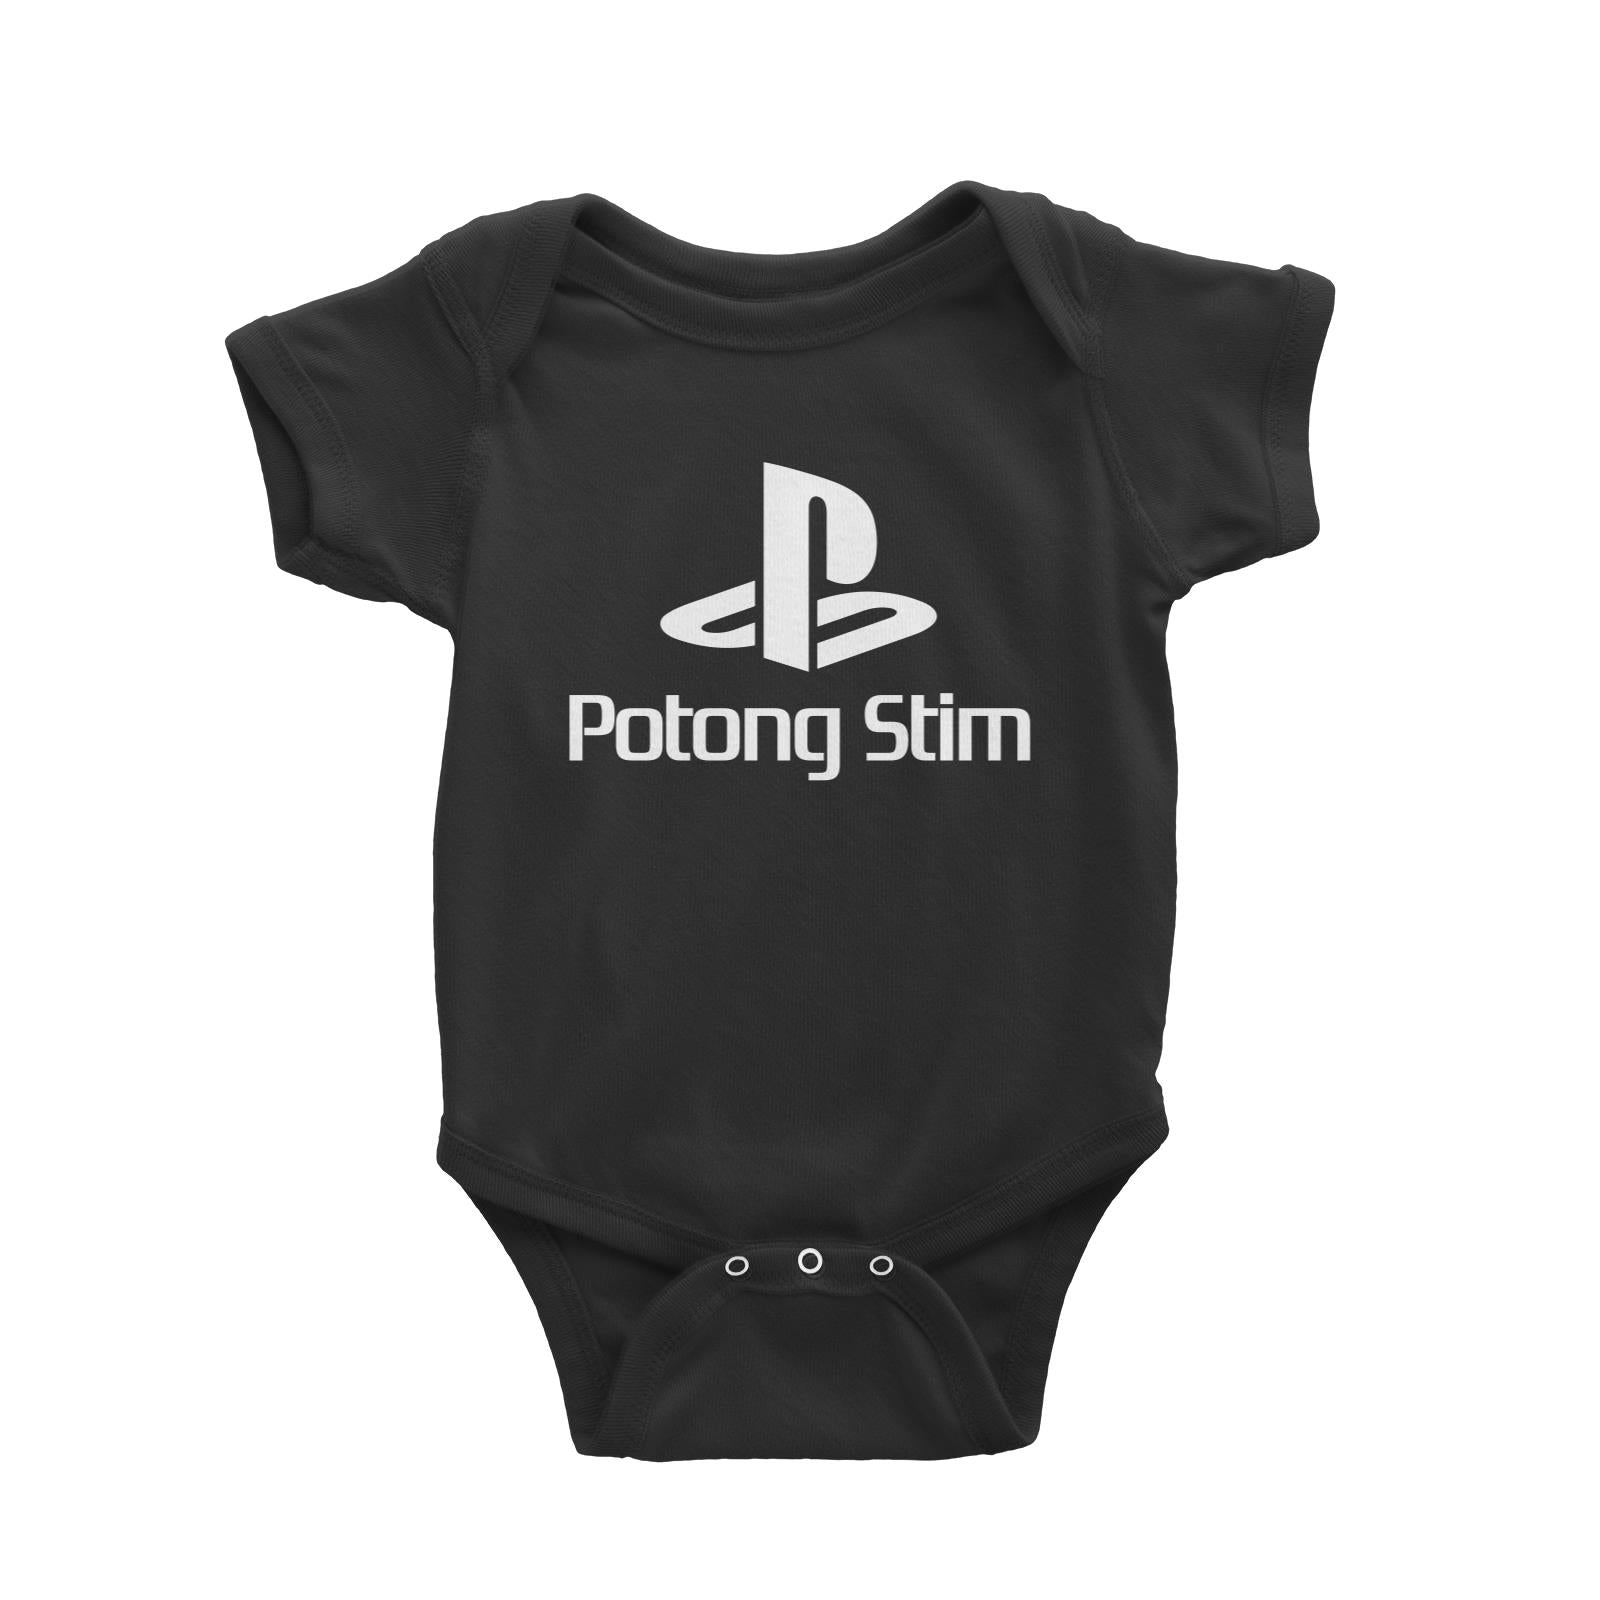 Slang Statement Potong Stim Baby Romper